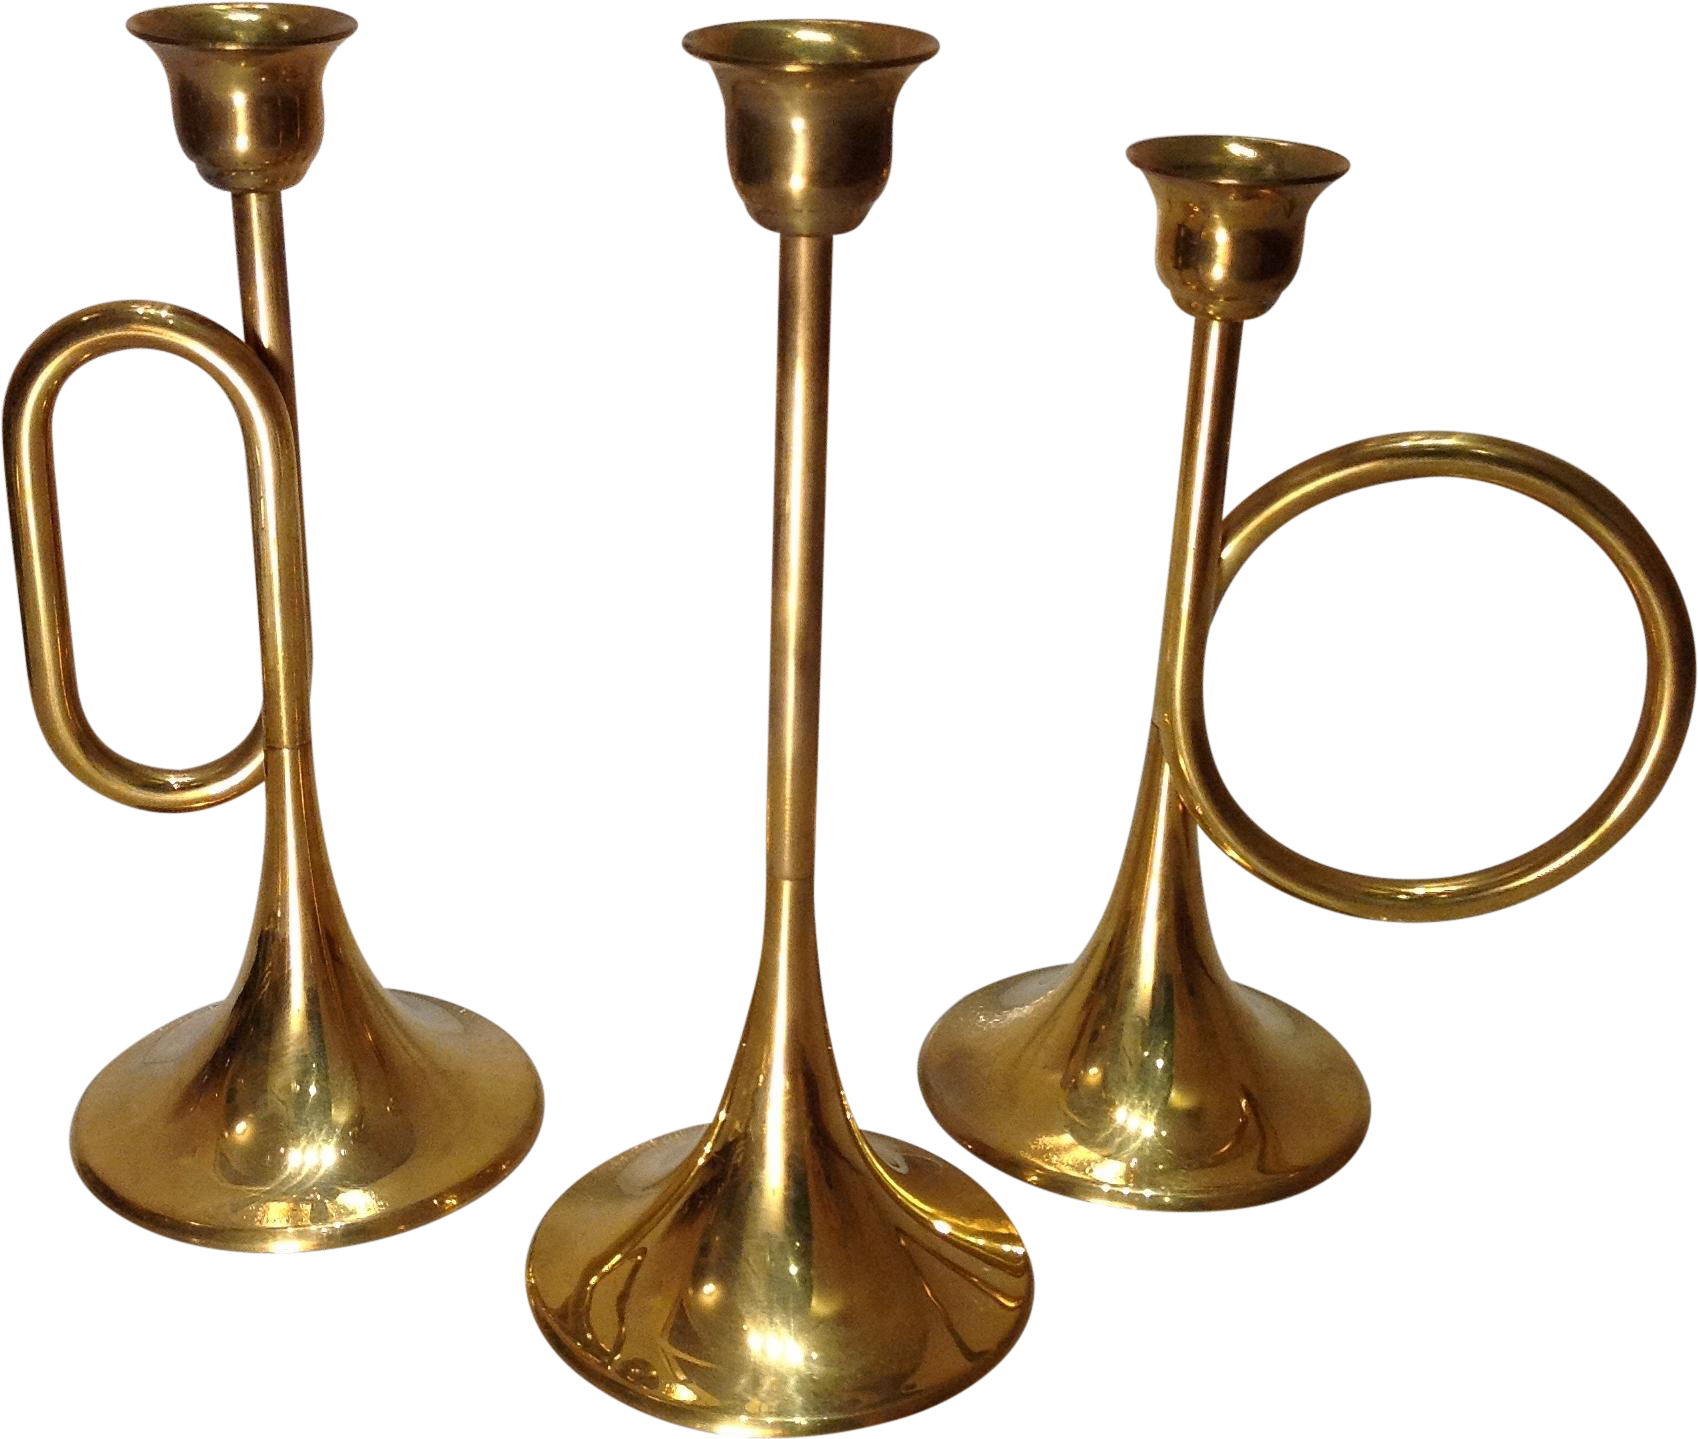 Vintage Brass Candlestick Holders PNG image